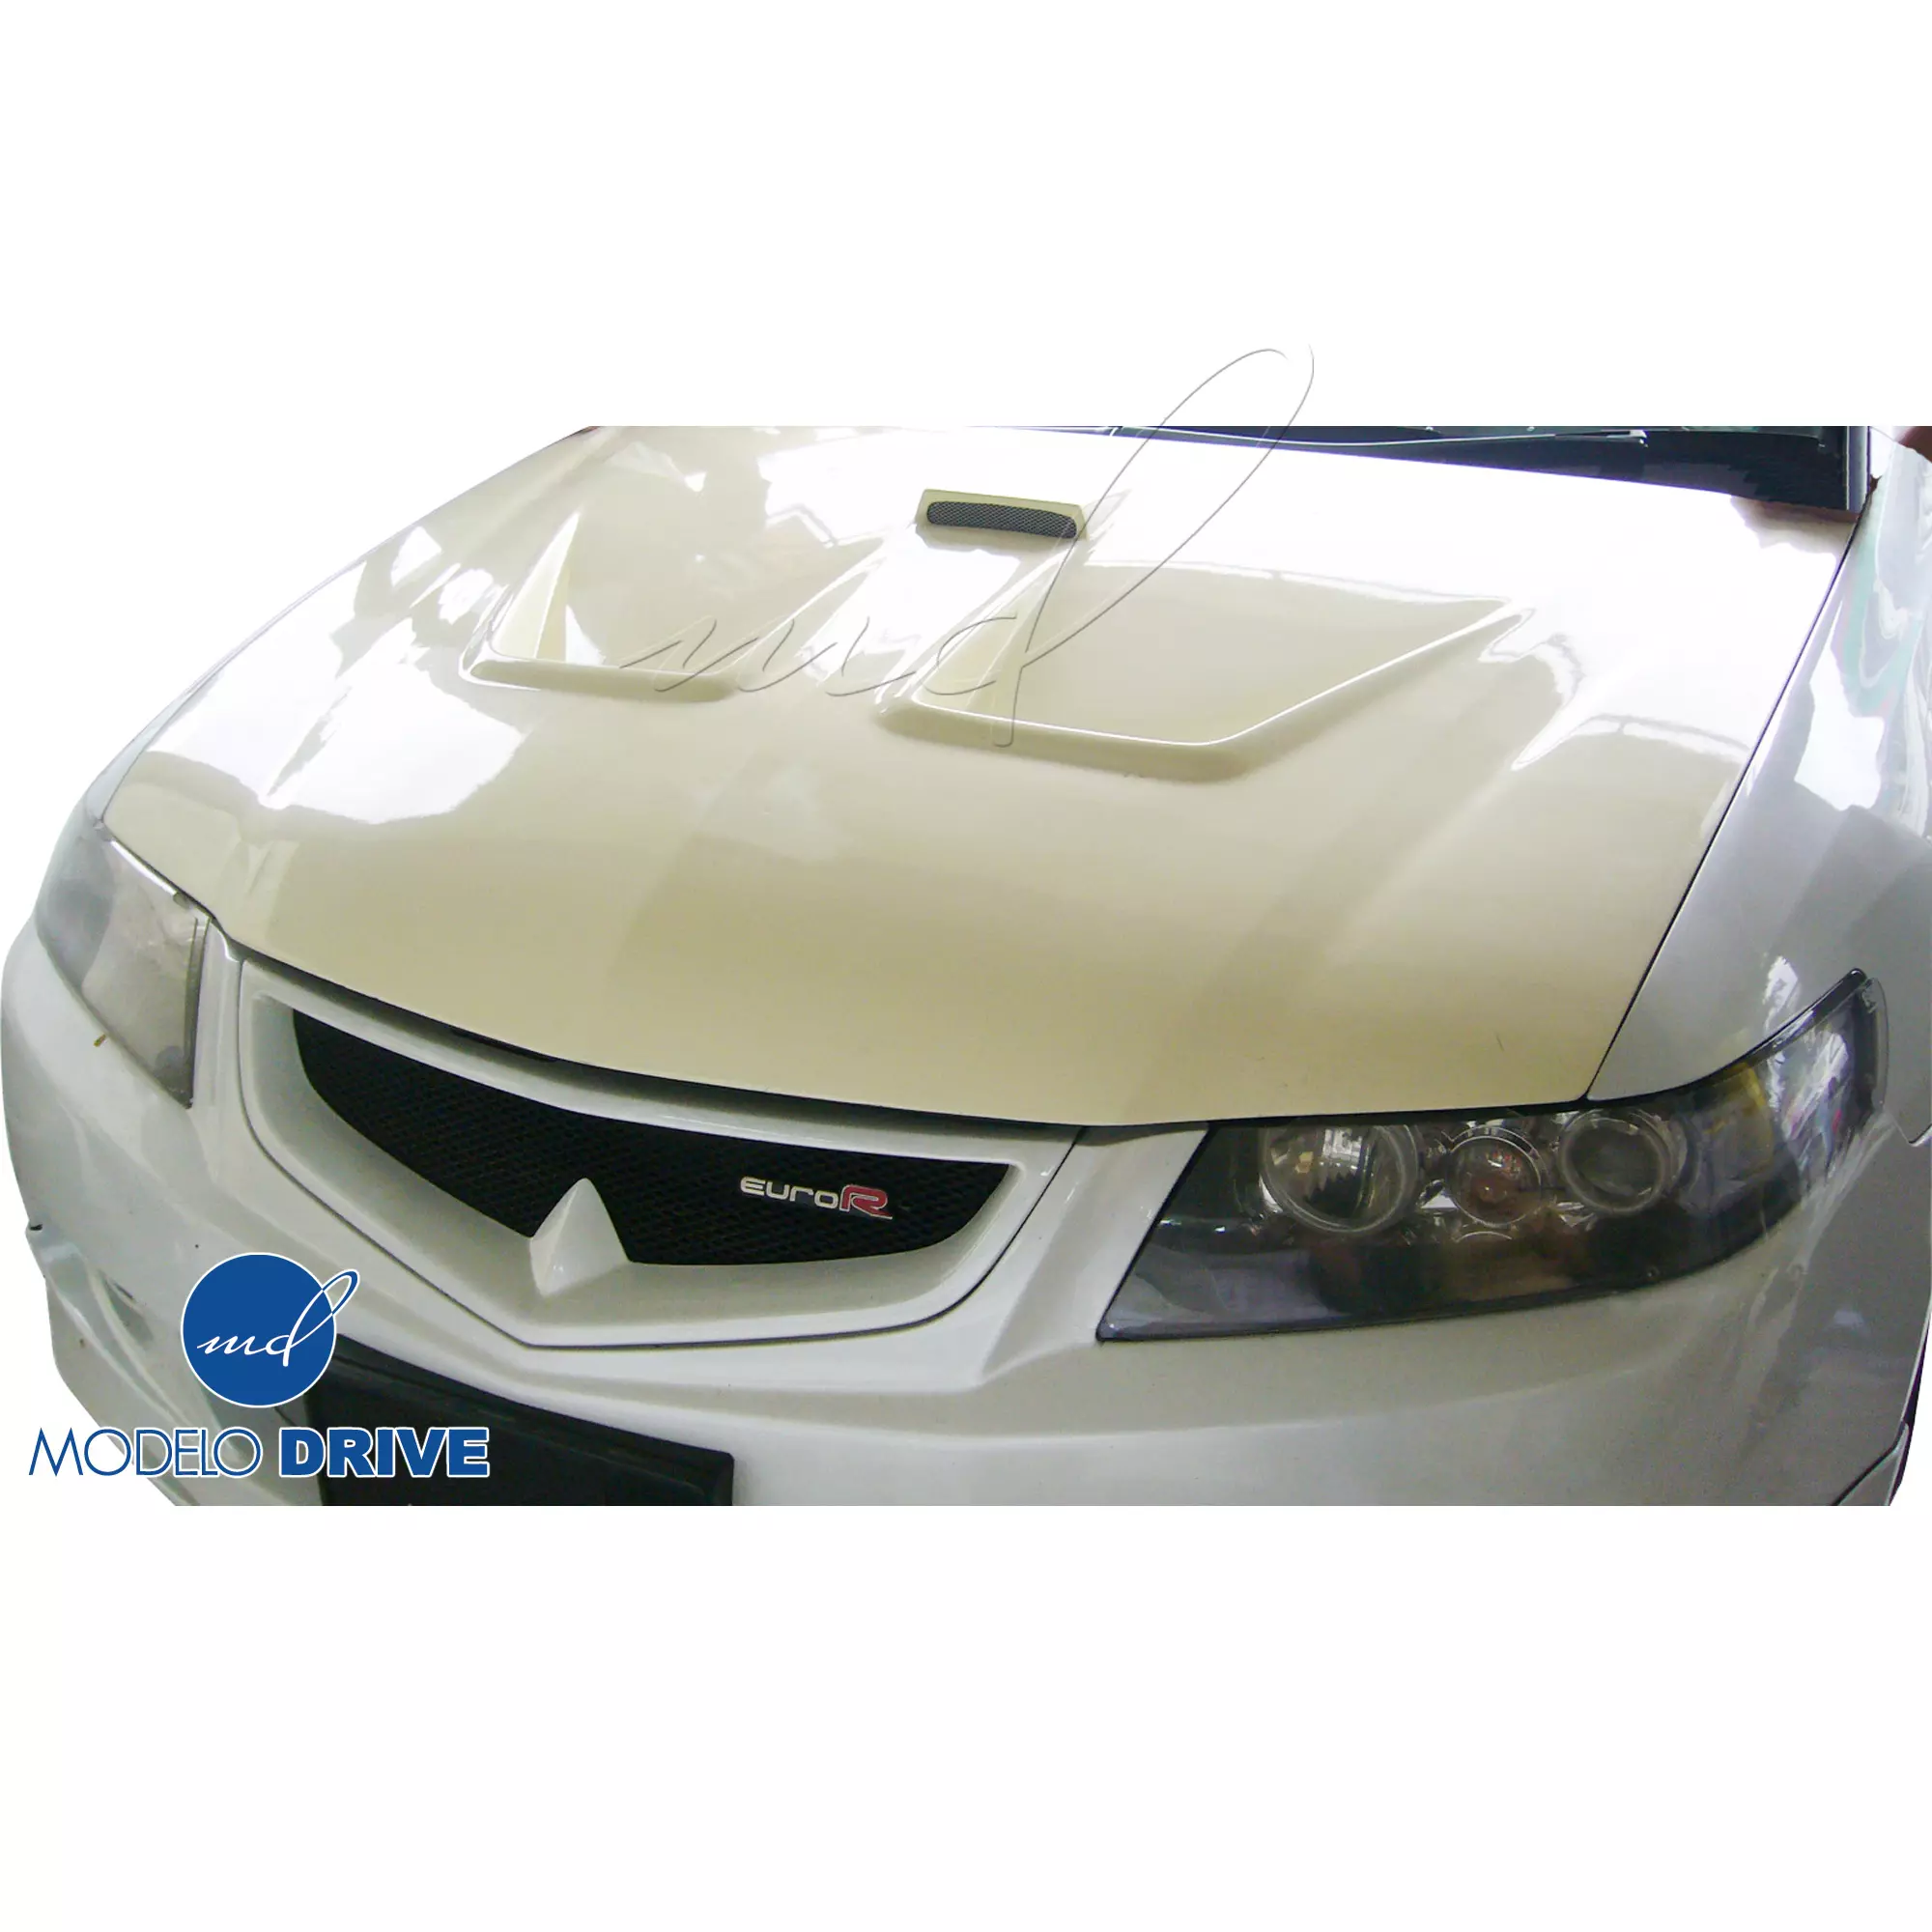 ModeloDrive FRP MUGE Hood > Acura TSX CL9 2004-2008 - Image 2